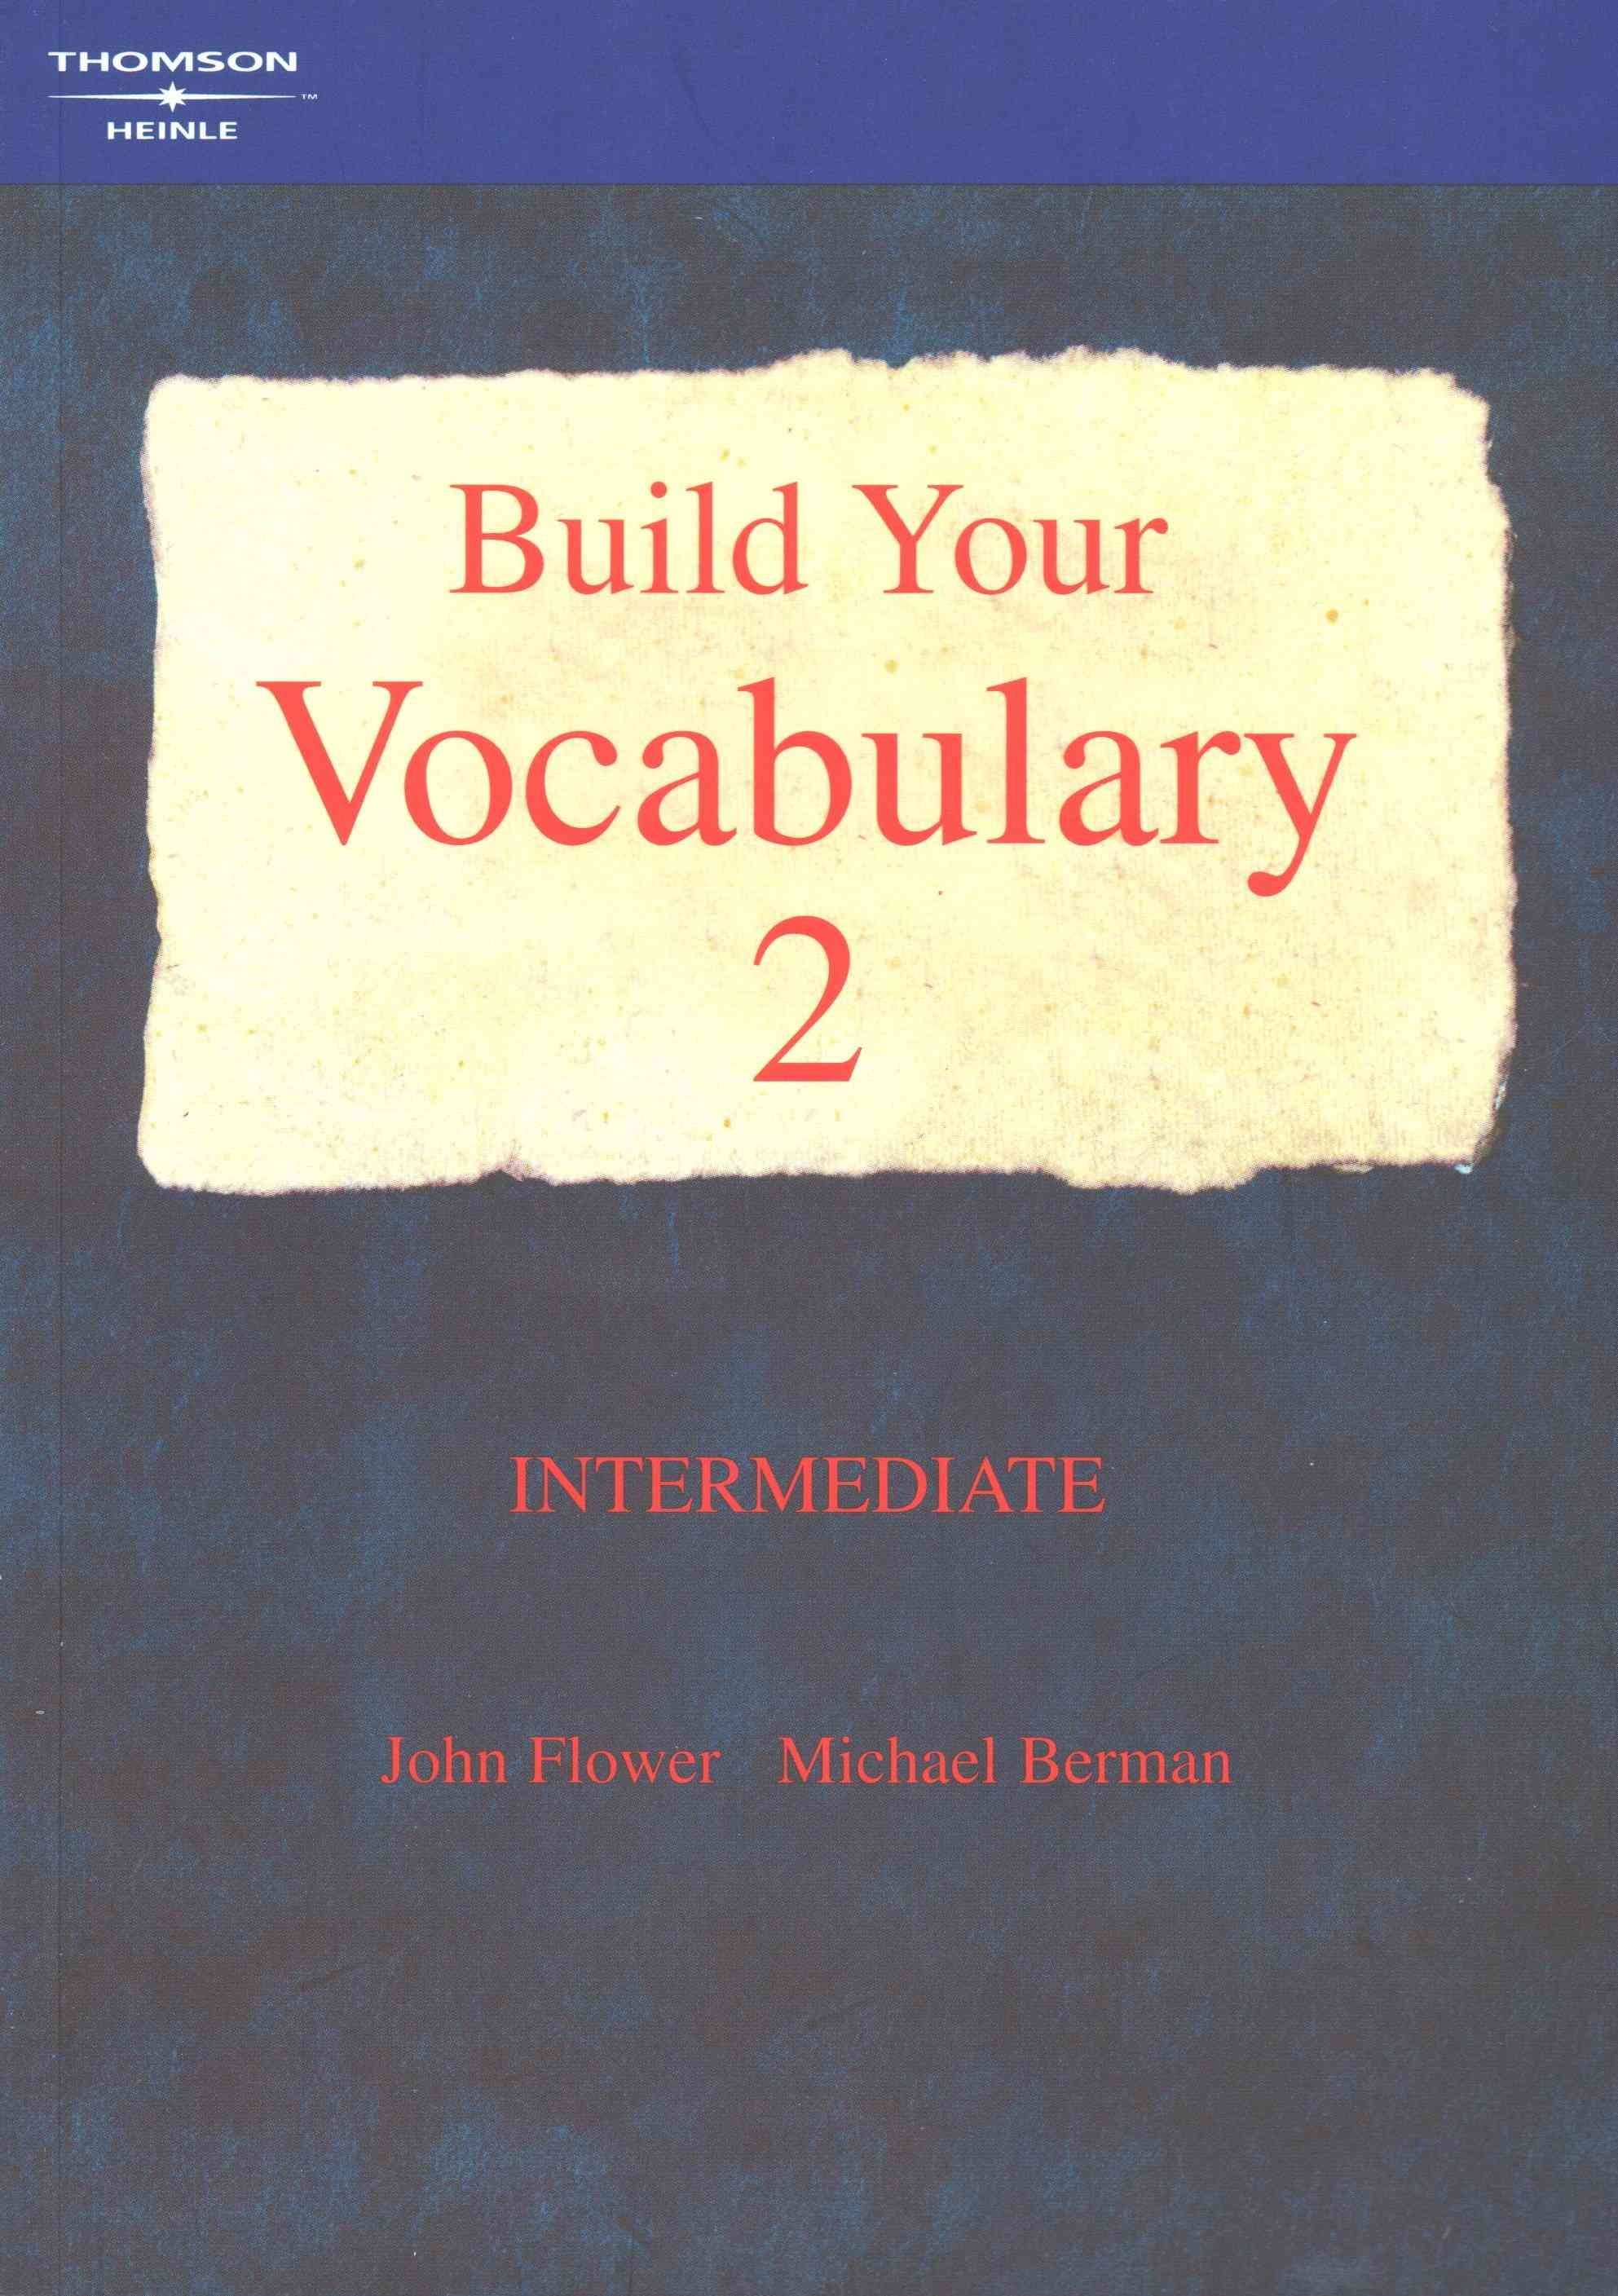 Build Your Vocabulary